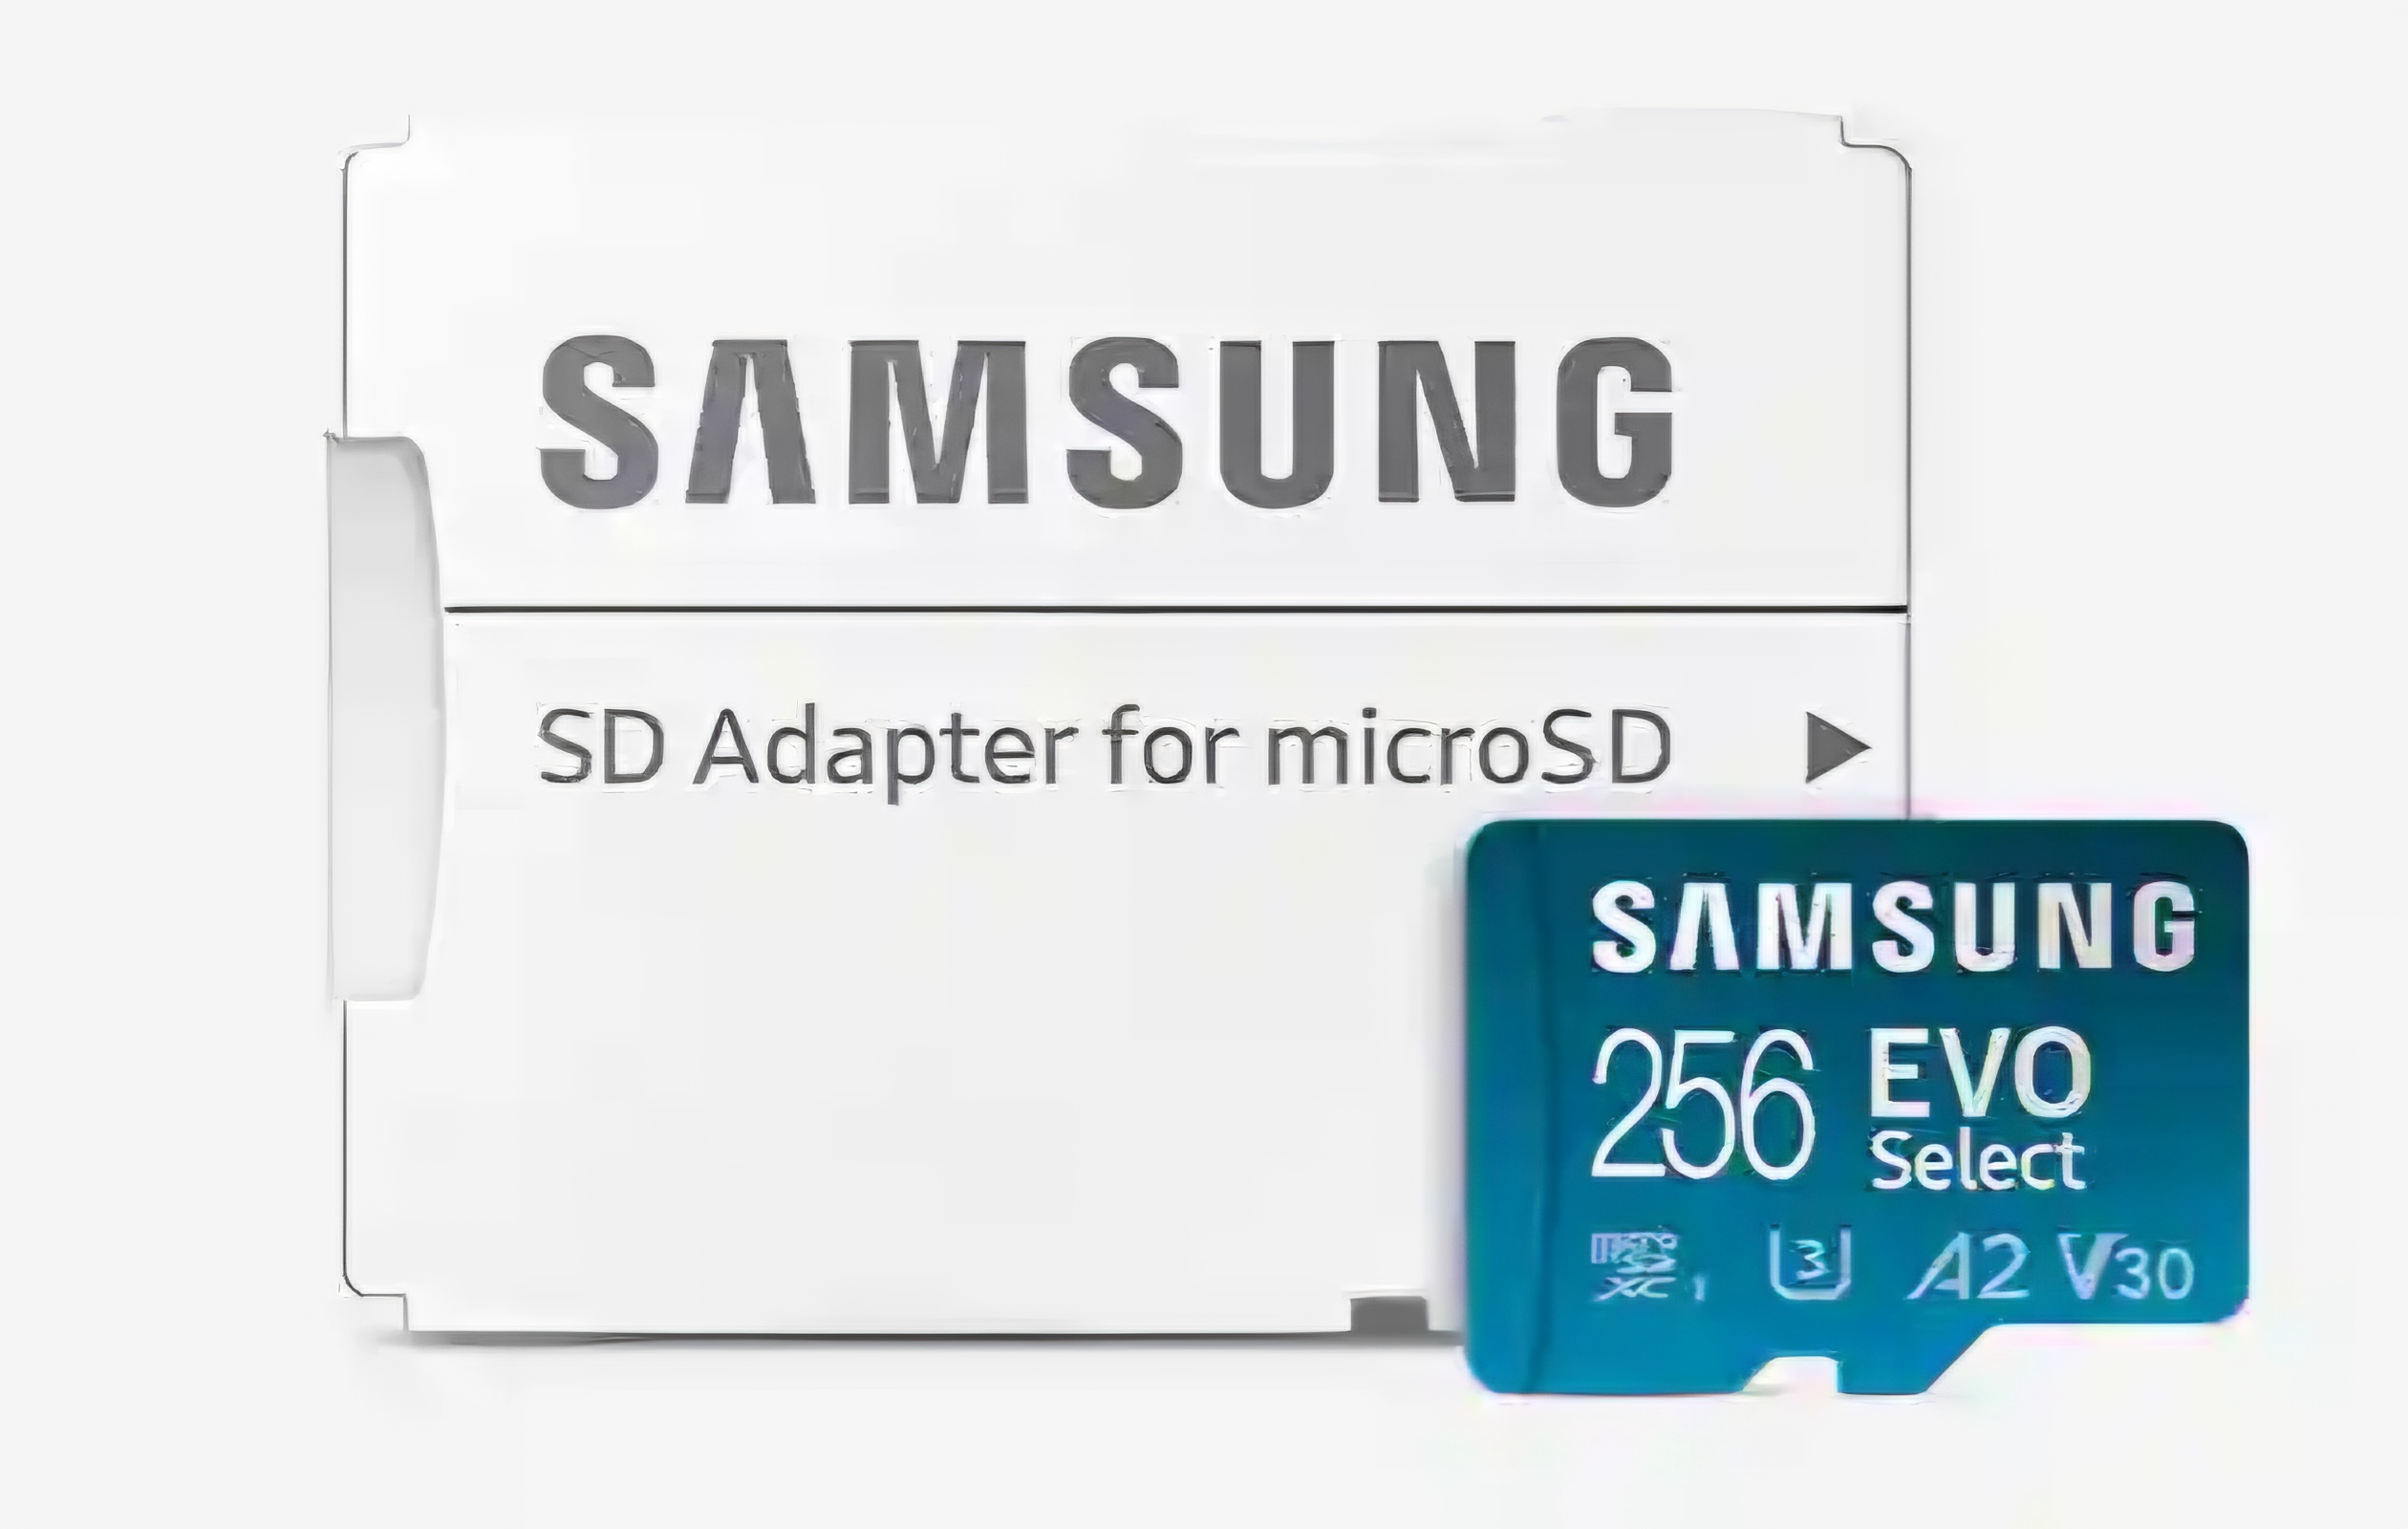 SDSAC-3864-Memory-Card-PF-Header-DT-1440x400.jpg